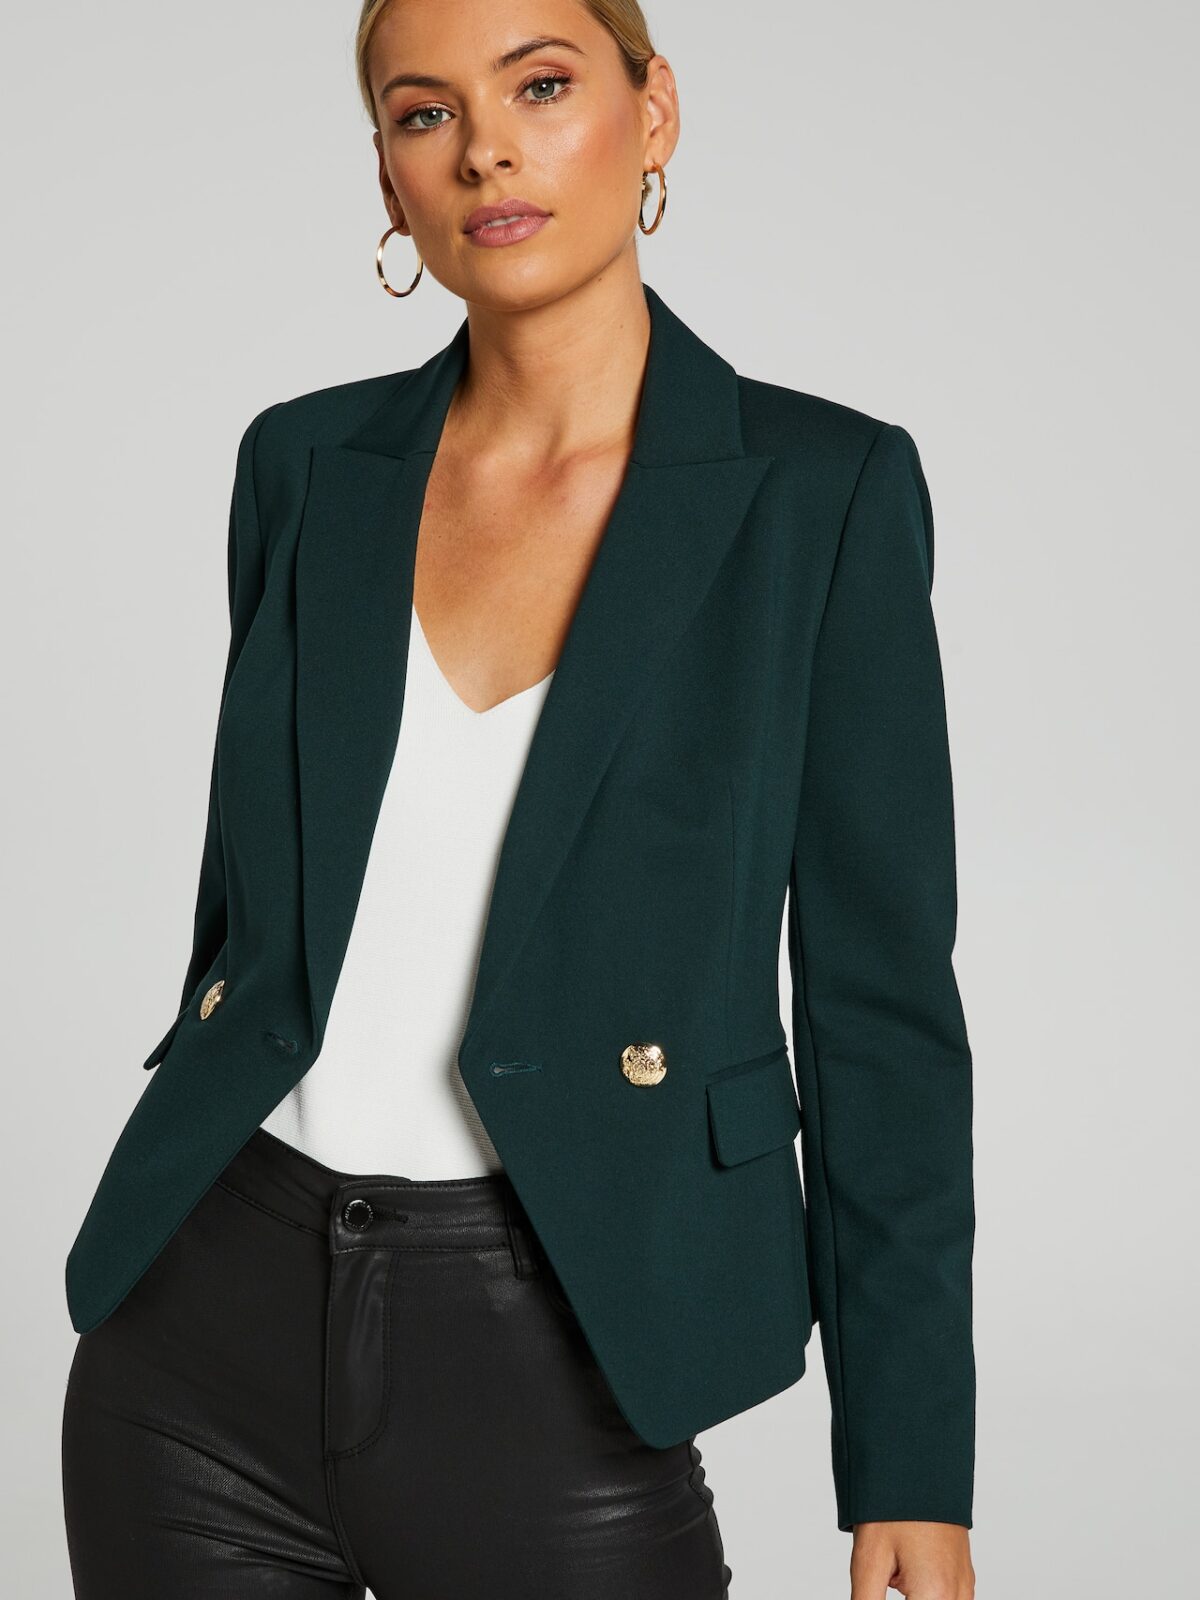 Model wears dark green Willow blazer from Portmans